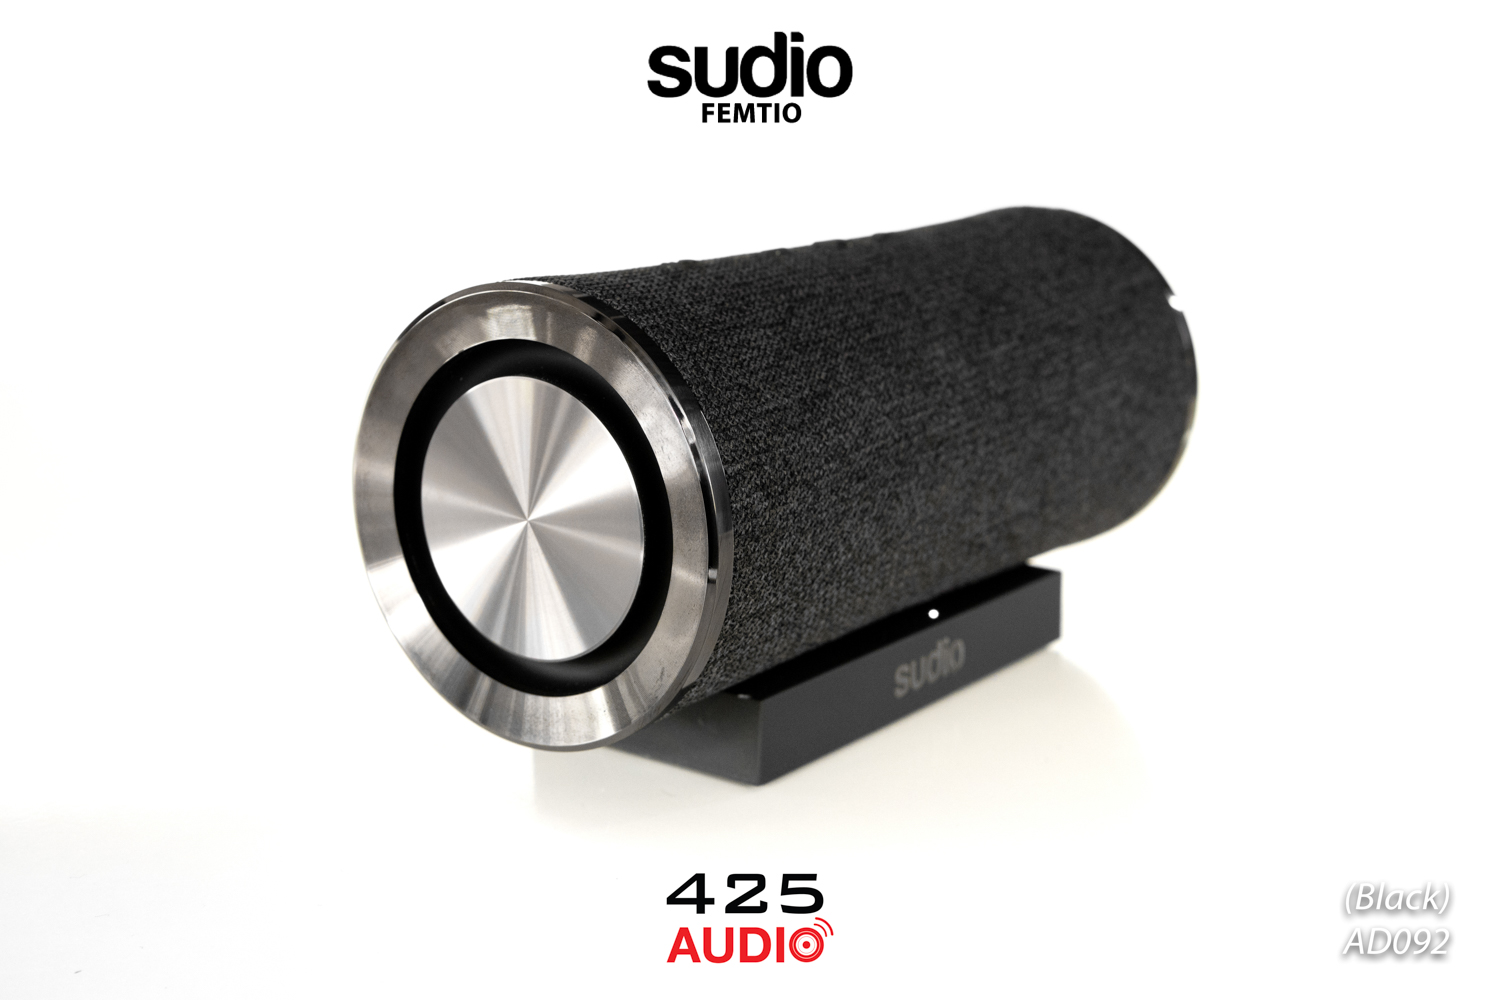 Sudio Femtio,sudio,femtio,IPX6,bluetooth speaker,ลำโพงกันน้ำ,ลำโพงบลูทูธ,stereo speaker